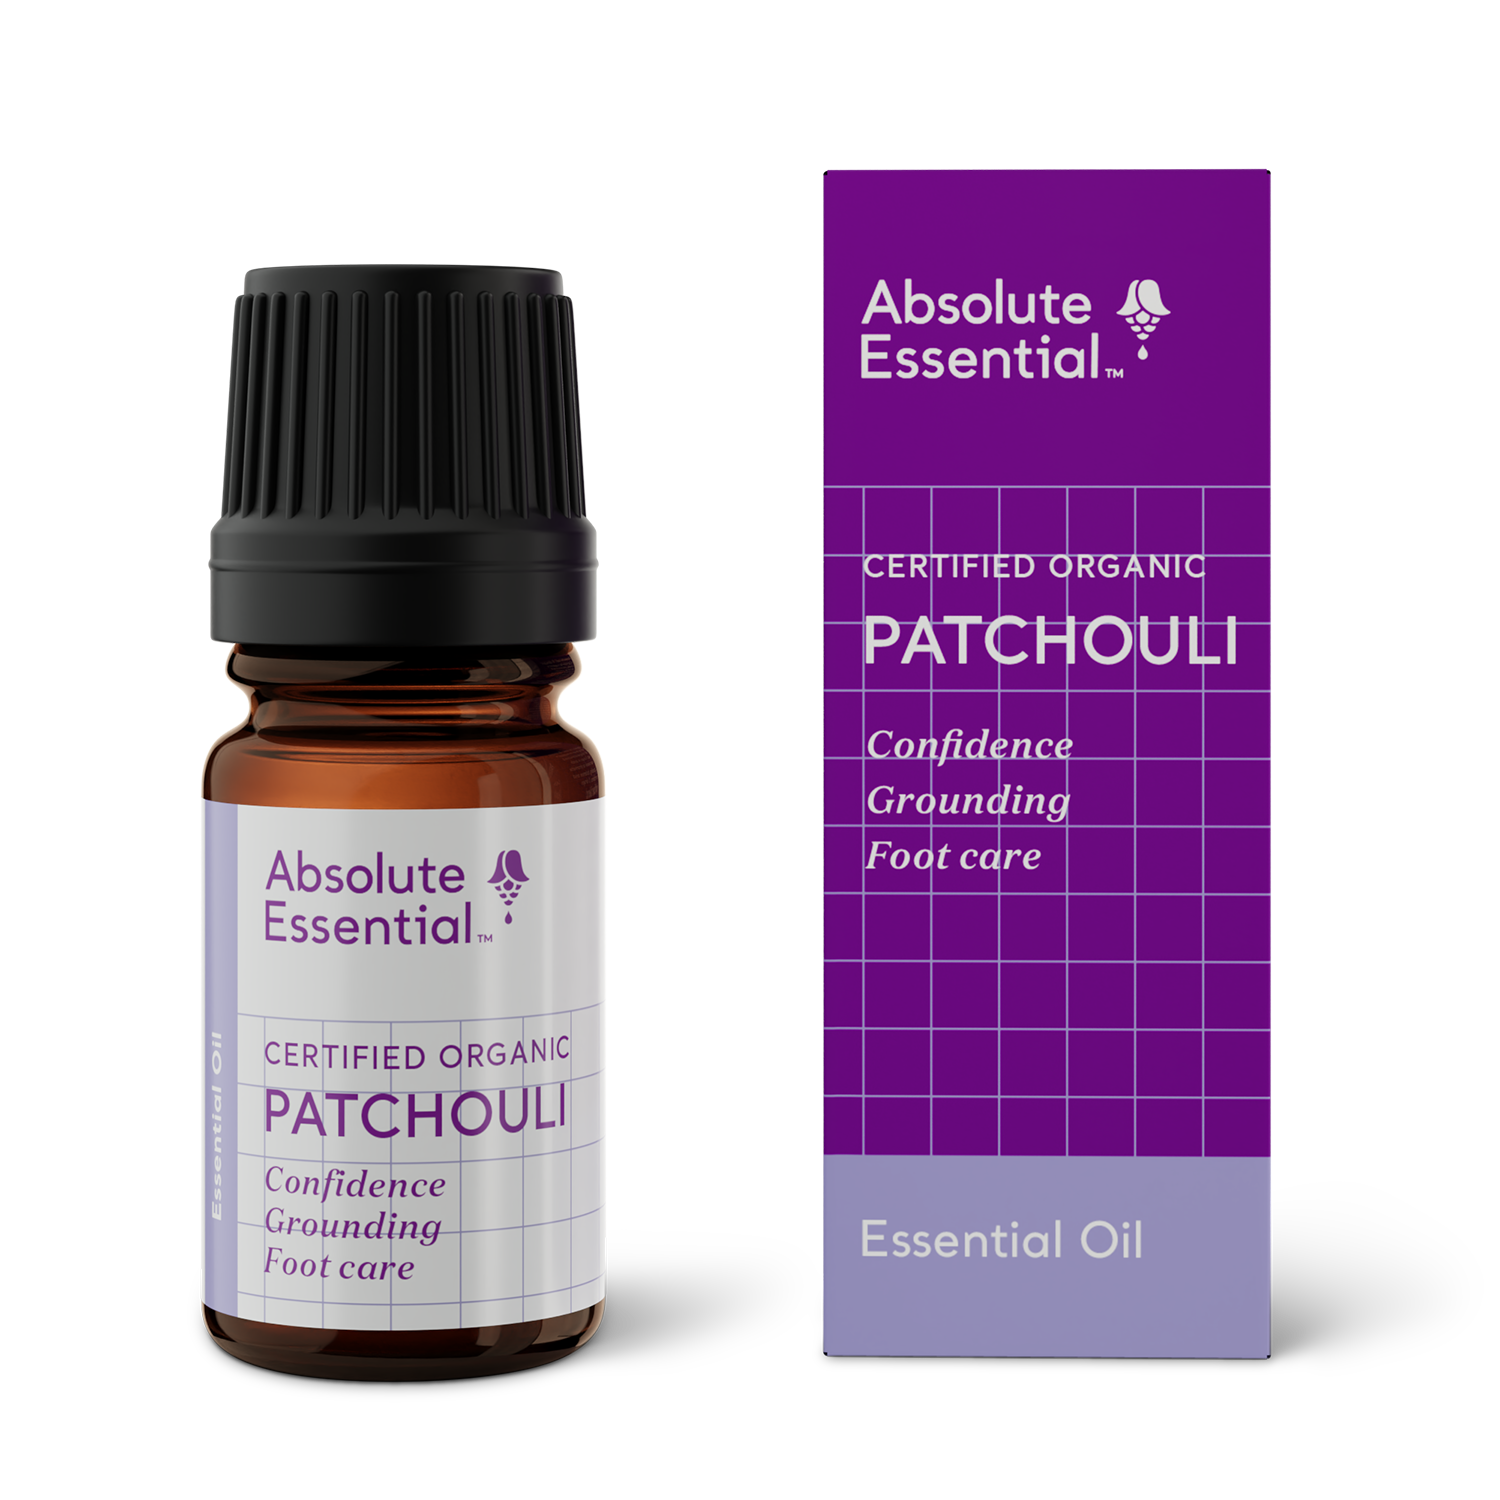 Patchouli Essential Oil